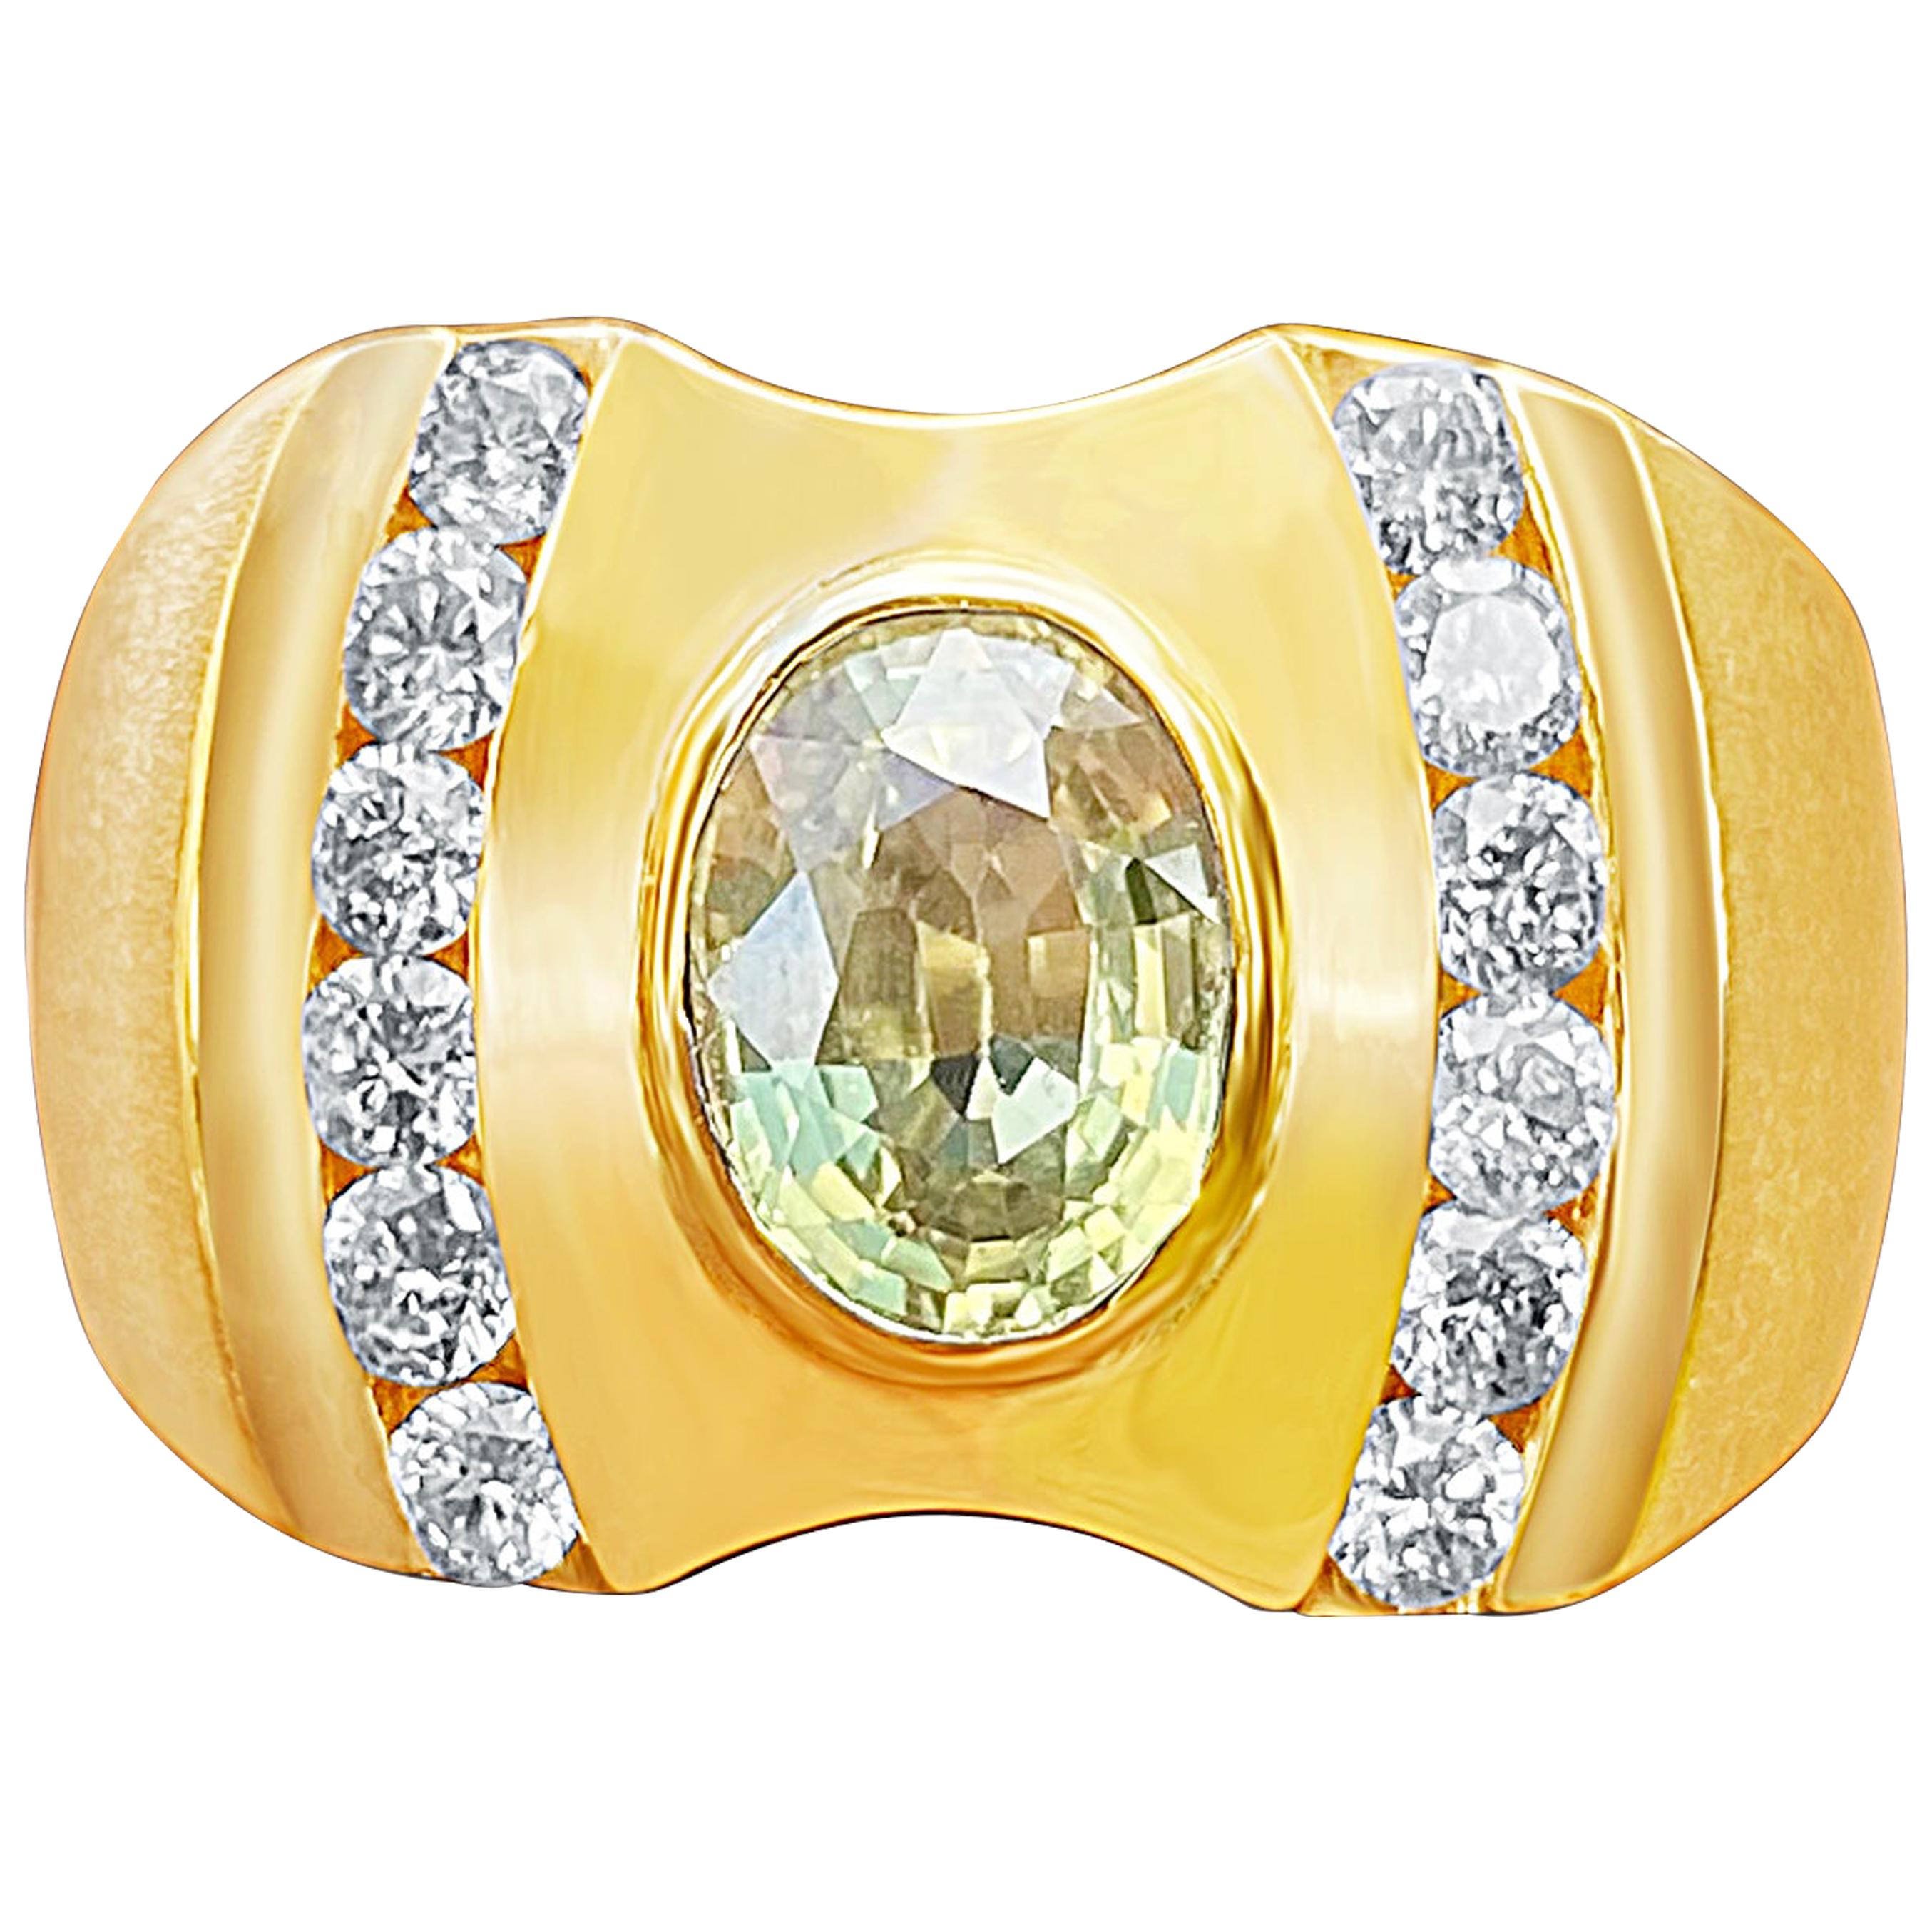 2.55 Carat Oval-Cut Yellow Sapphire, Diamond and 14K Yellow Gold Men’s Ring